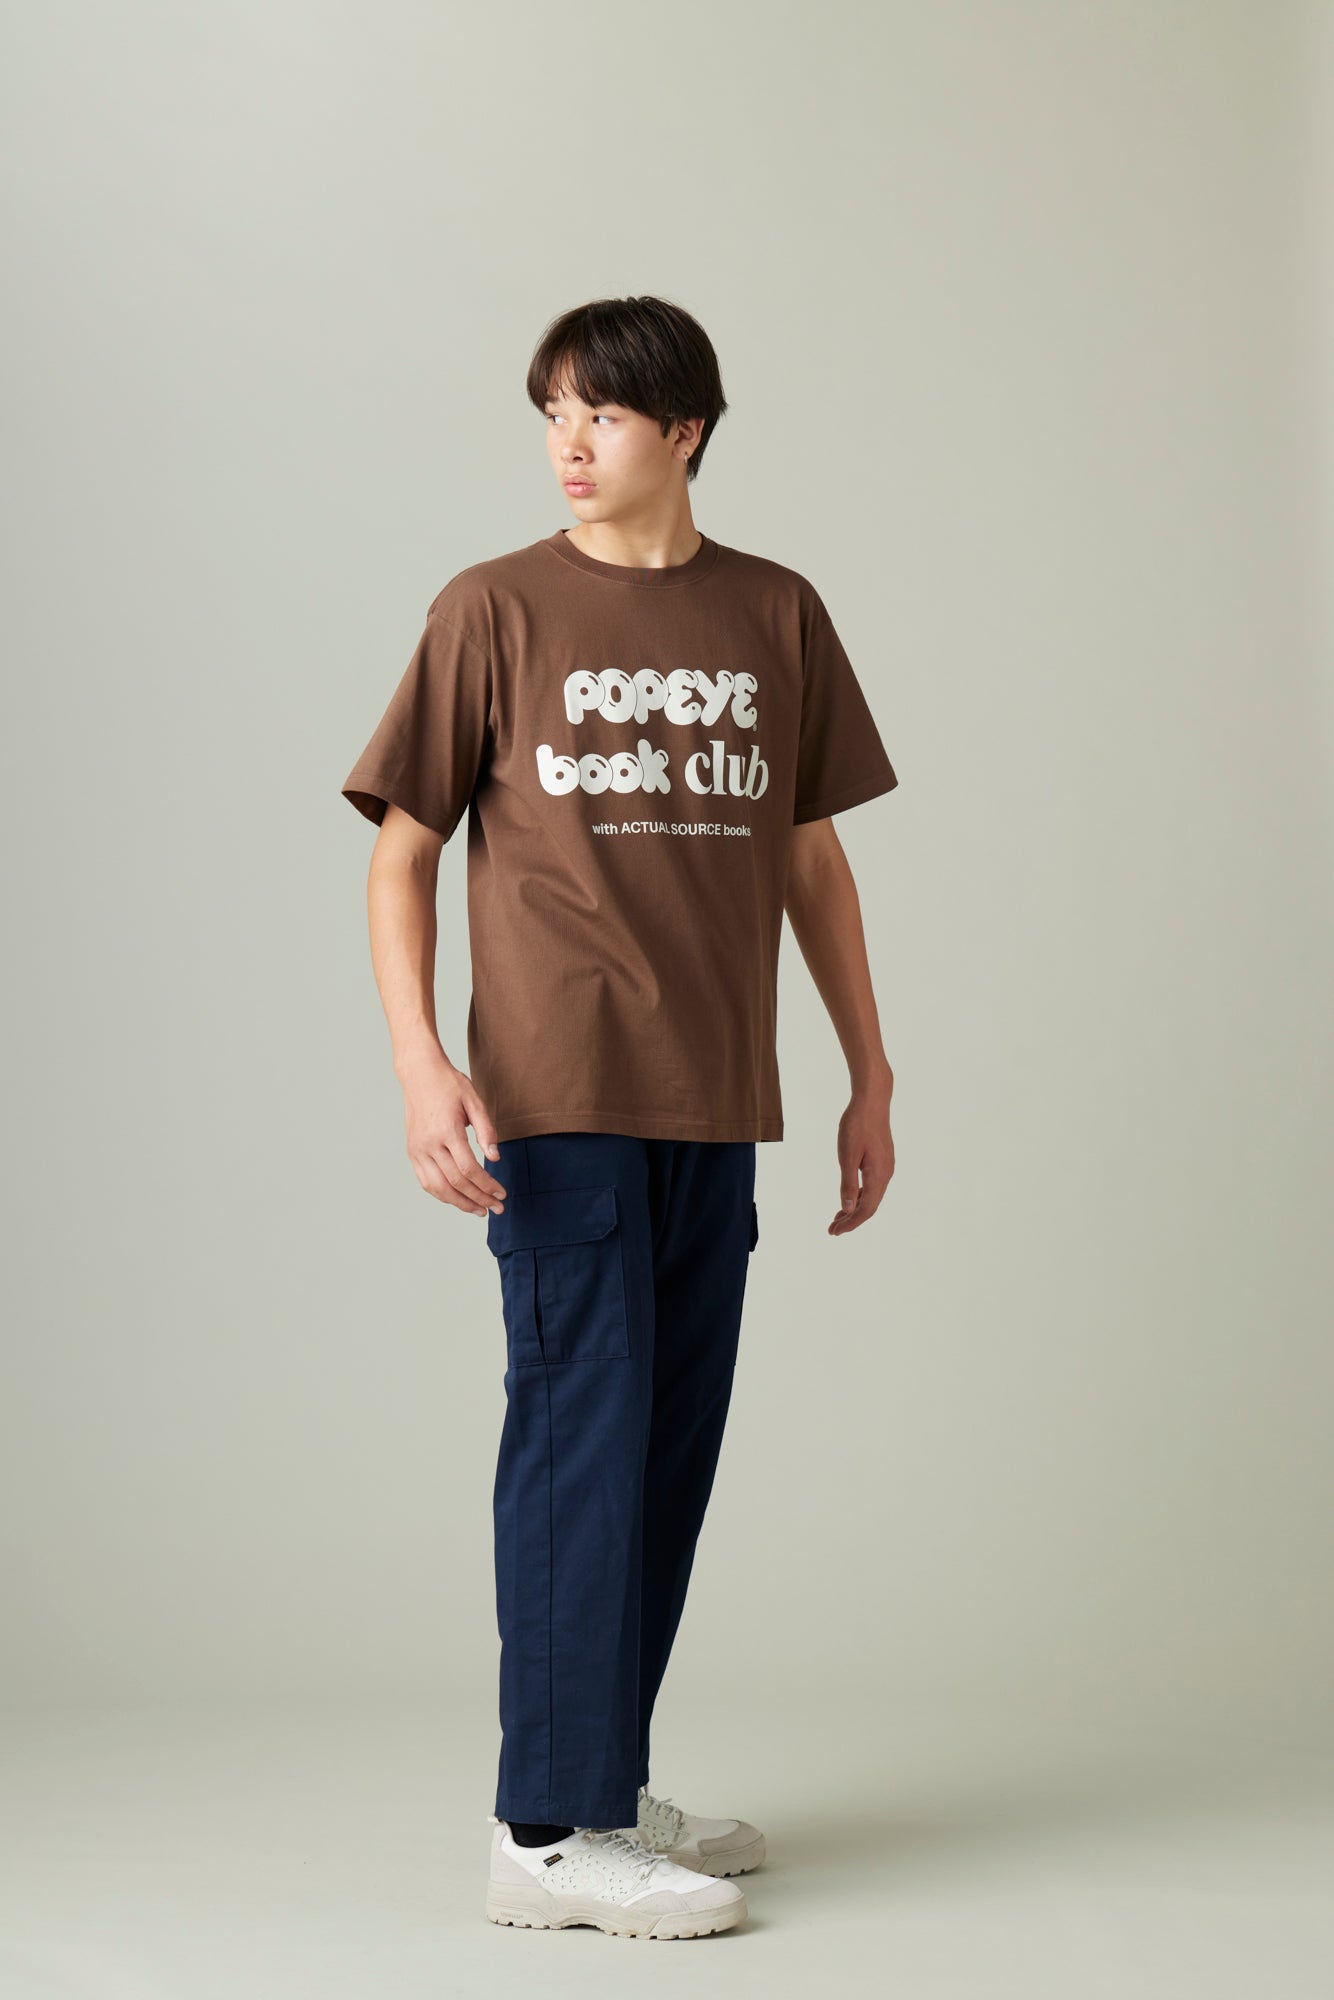 POPEYE BOOK CLUB Club T-Shirt / Dark Brown